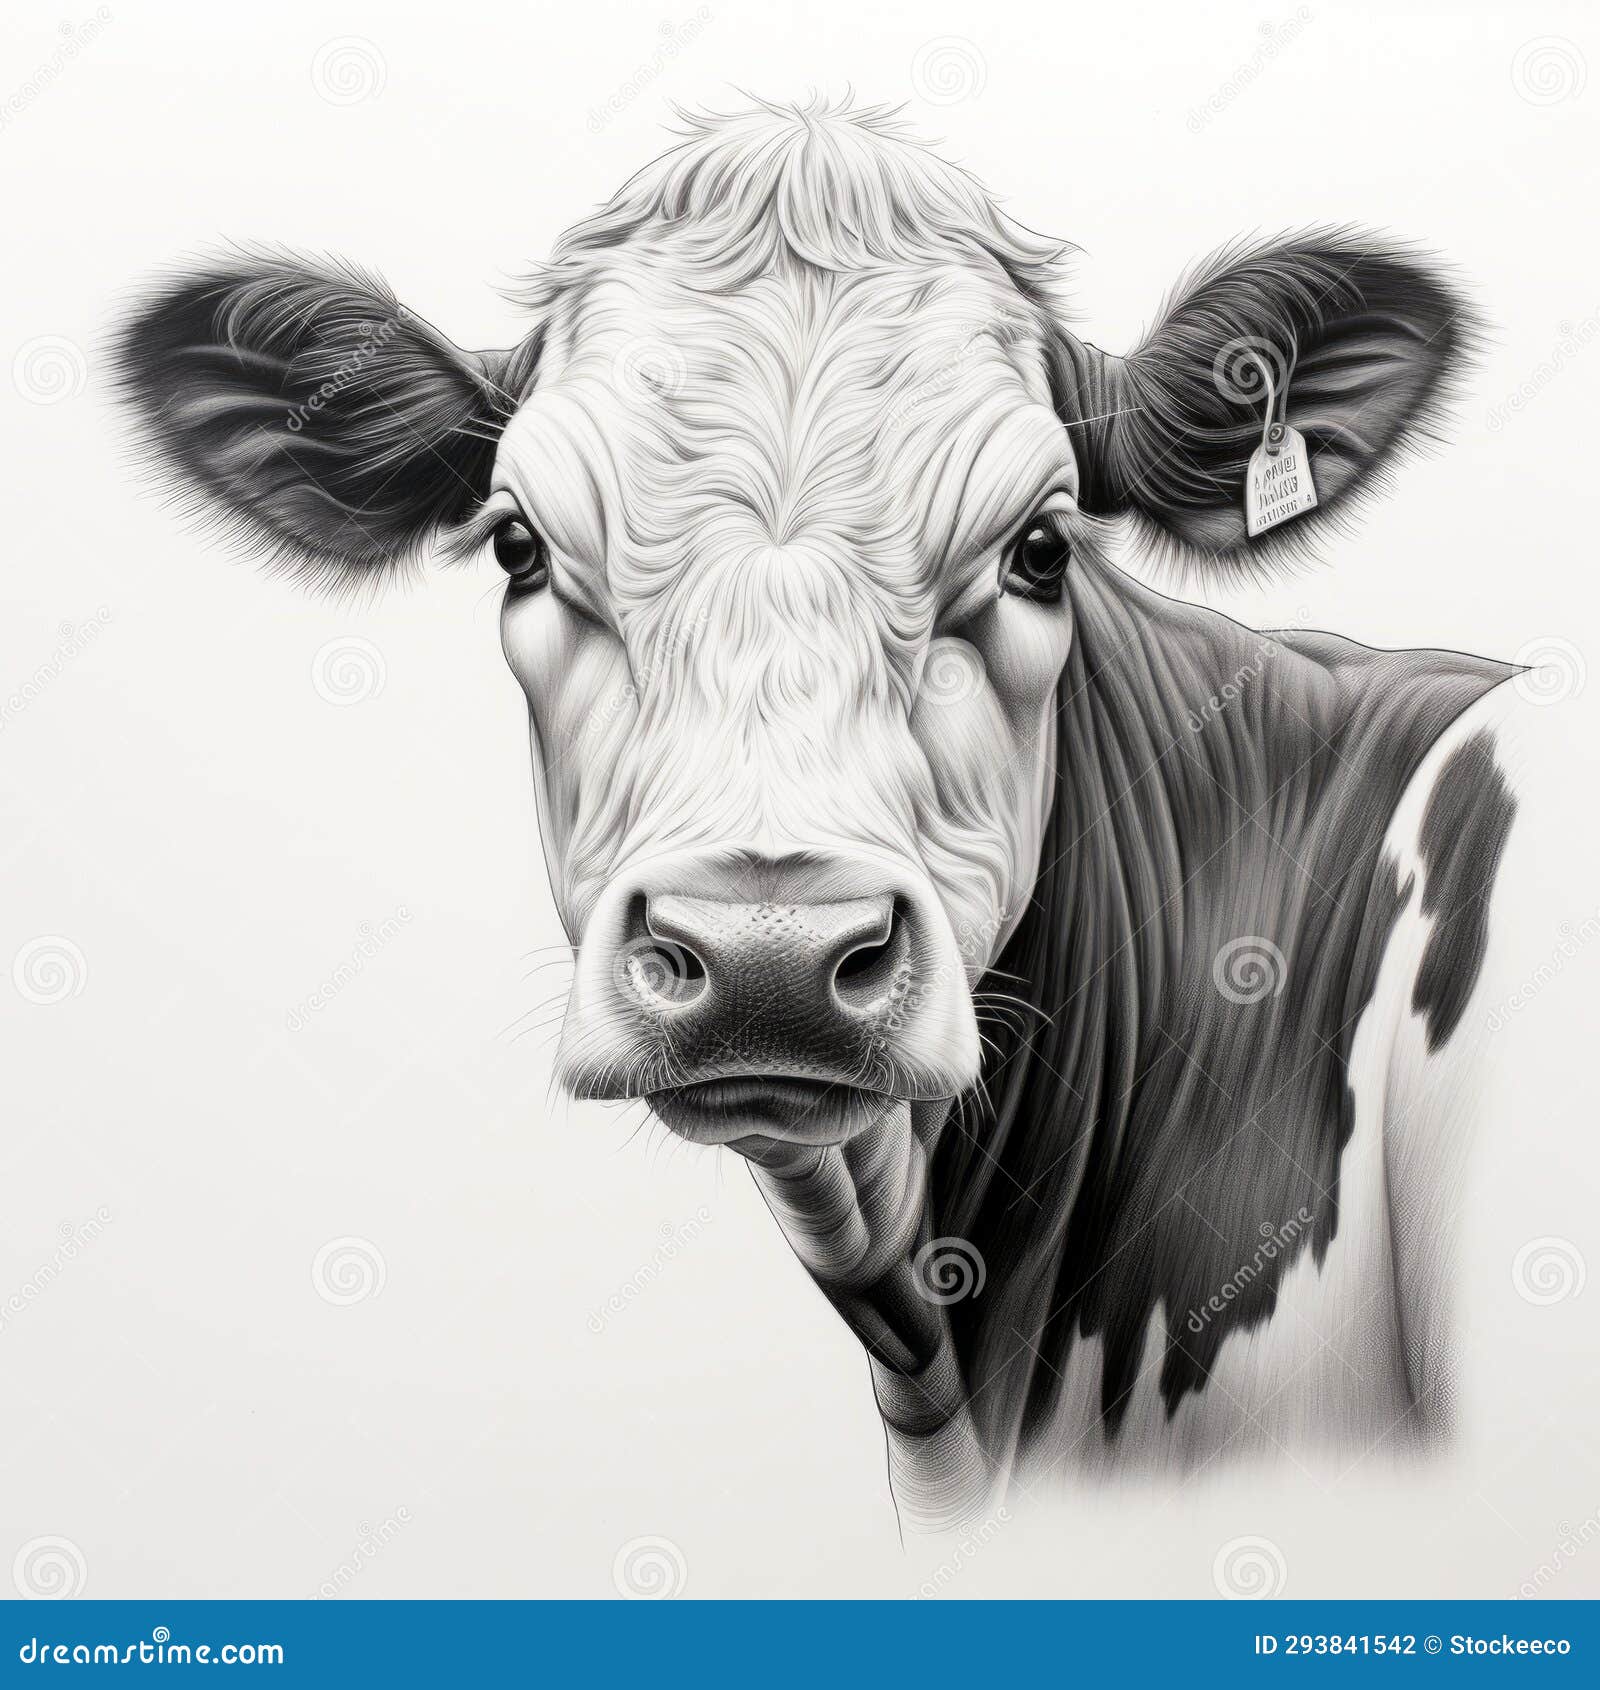 Jersey Cow Drawings for Sale - Fine Art America